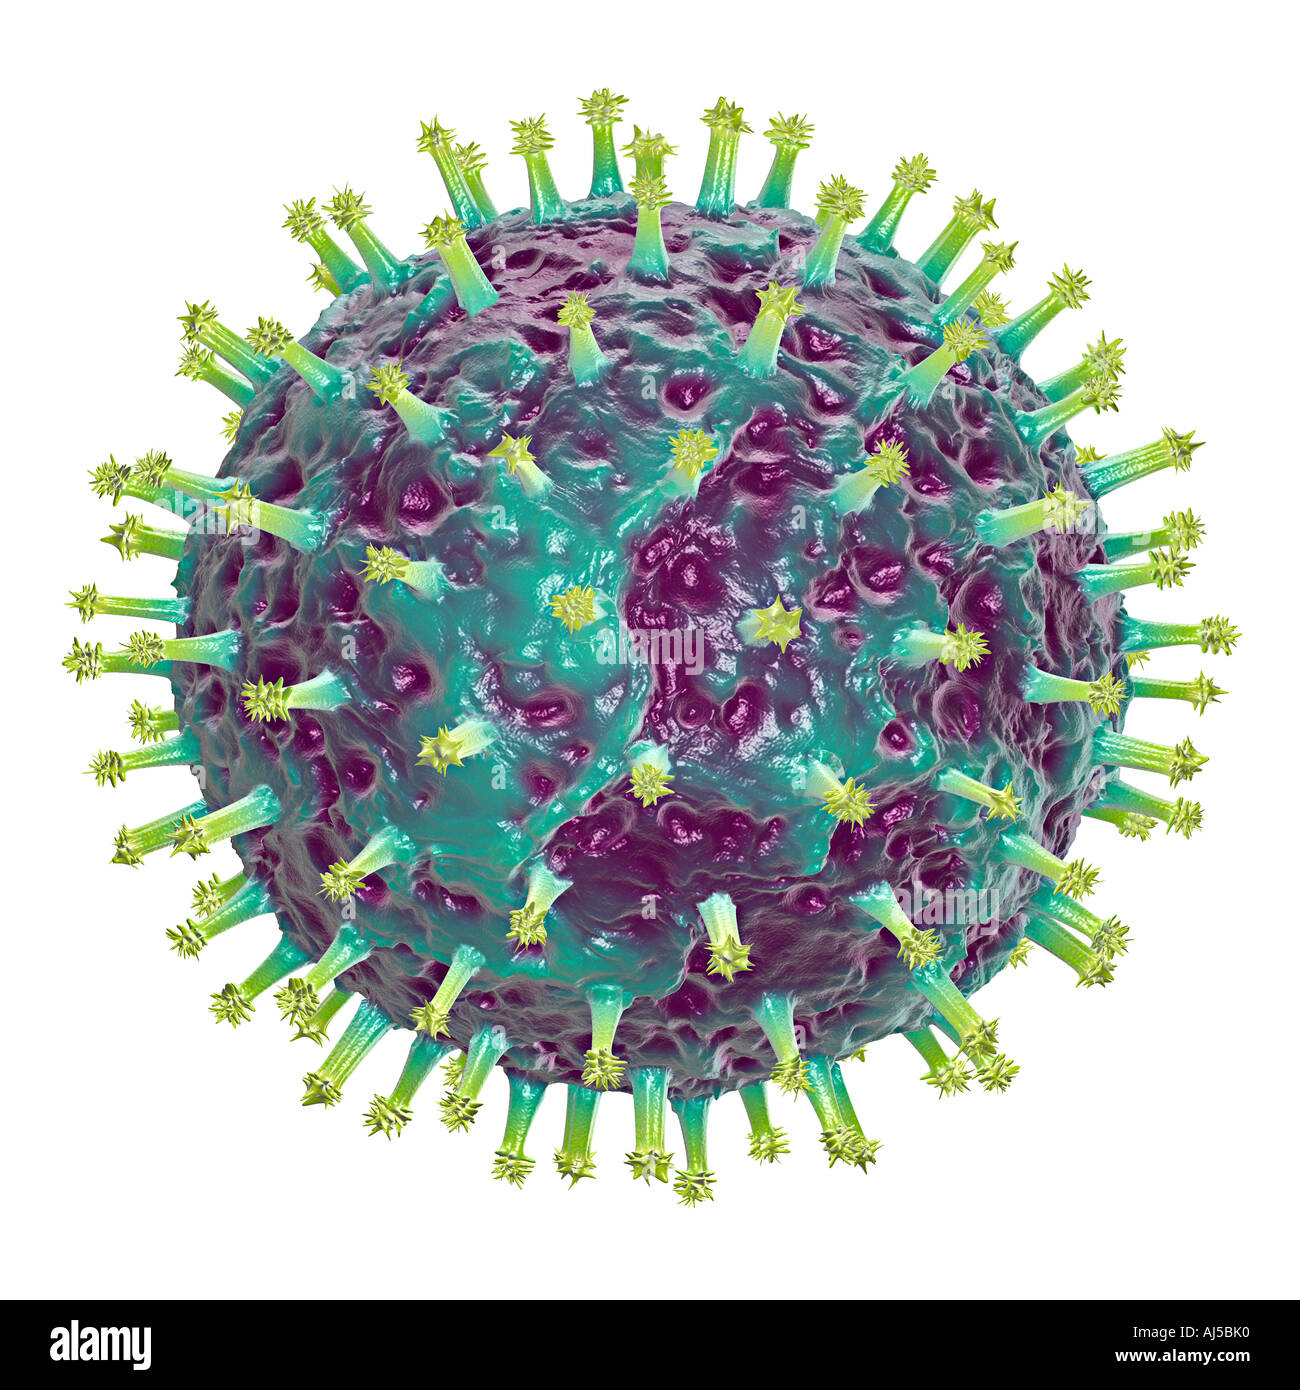 illustration of  Virus symbol of infection desease epidemic plague pestilence threat danger science pandemic pandemia Stock Photo